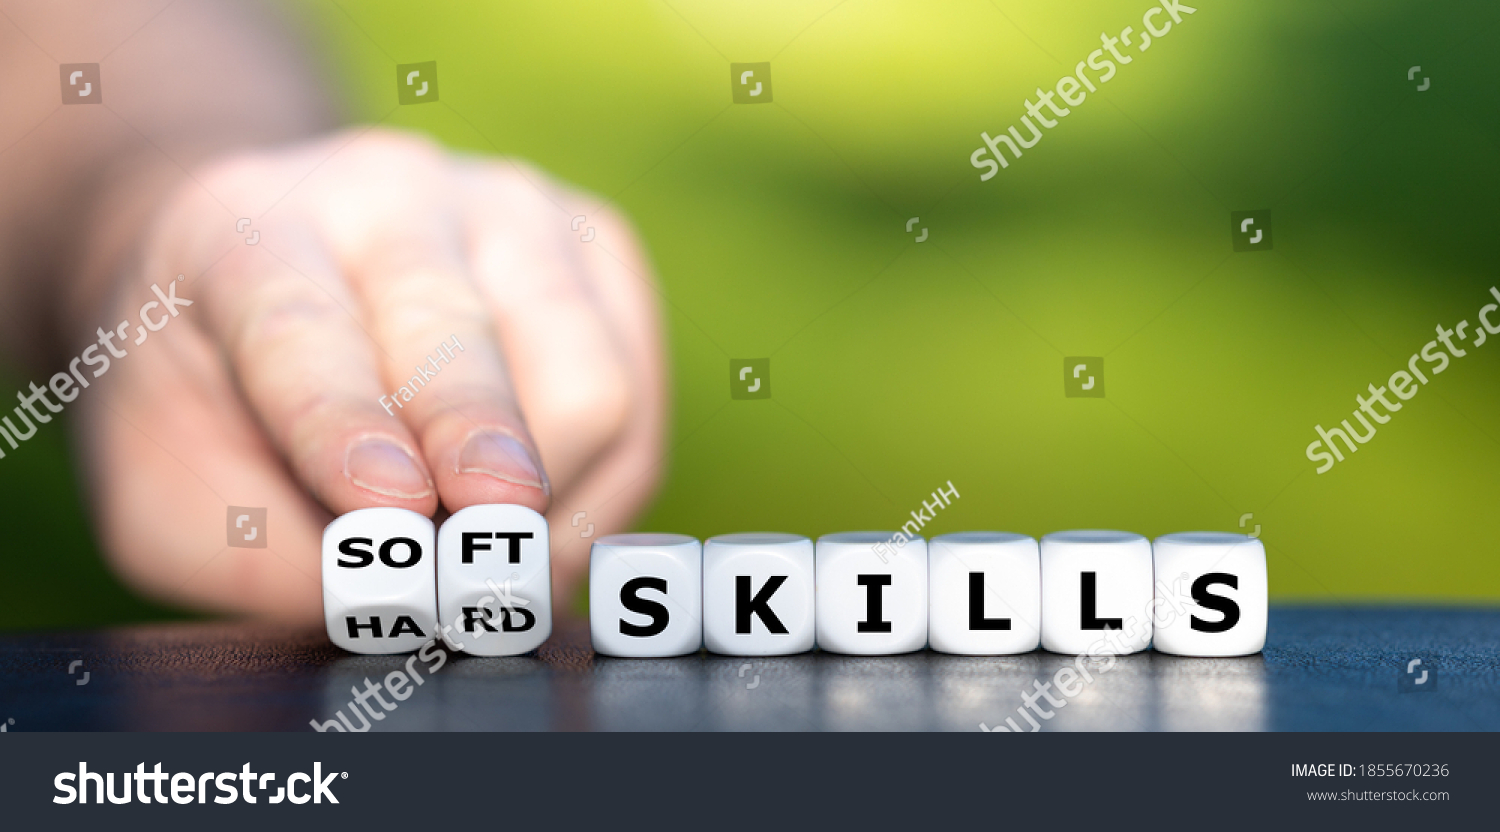 Hard skills versus soft skills. Dice form the expressions "hard skills" and "soft skills". #1855670236